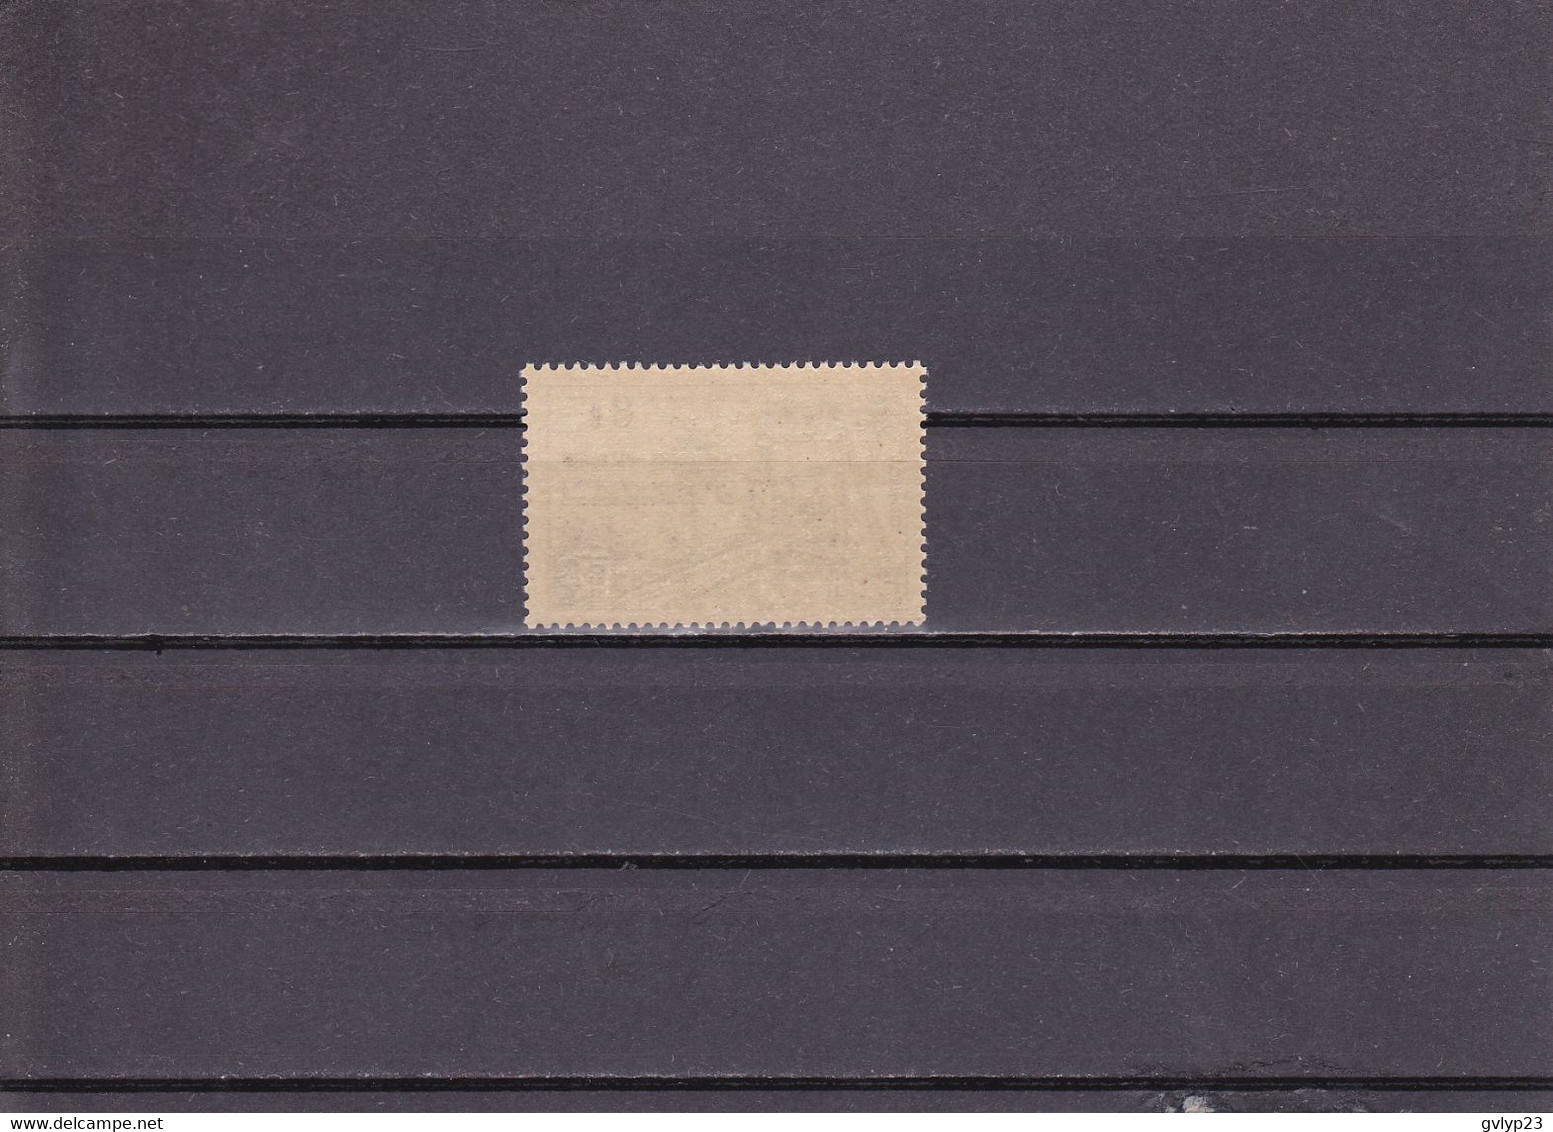 PUITS à GORDA /NEUF ** 8F BLEU  N° 47  YVERT ET TELLIER 1949 - Unused Stamps